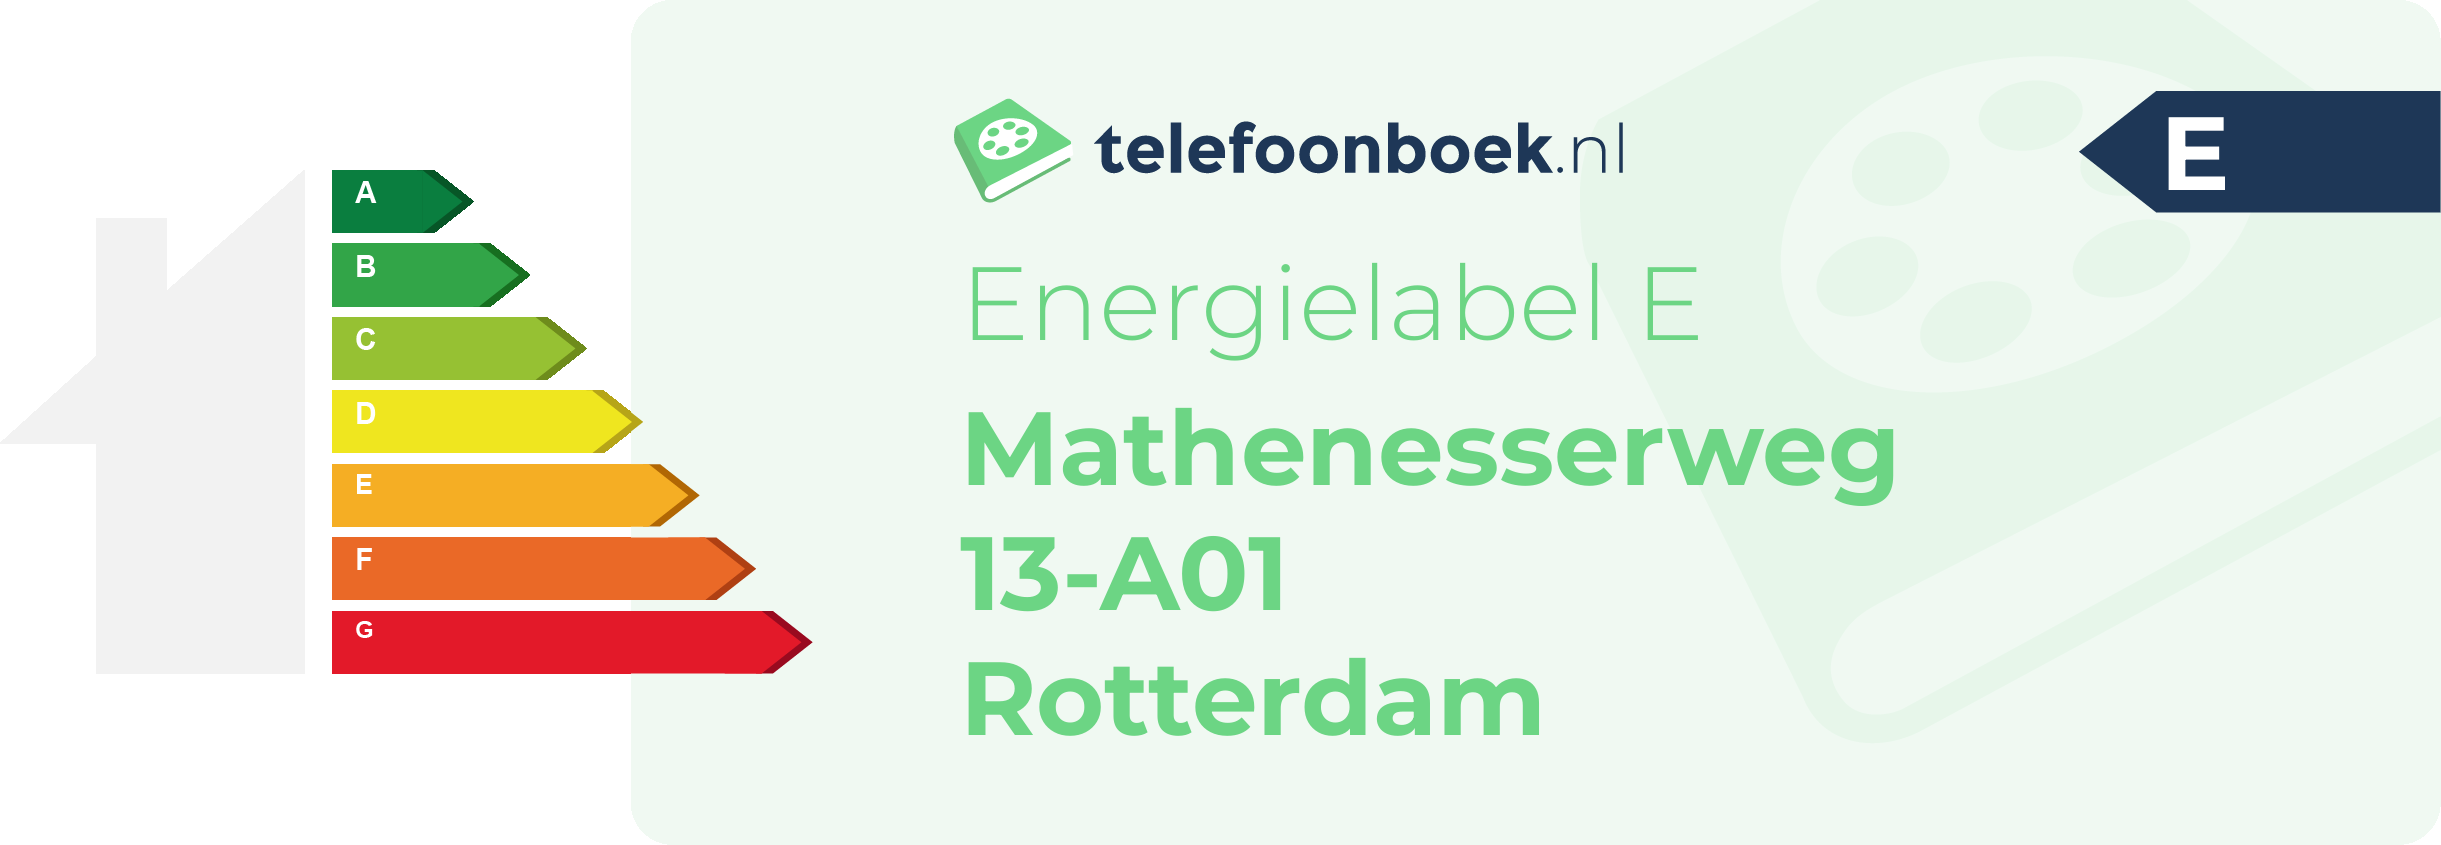 Energielabel Mathenesserweg 13-A01 Rotterdam